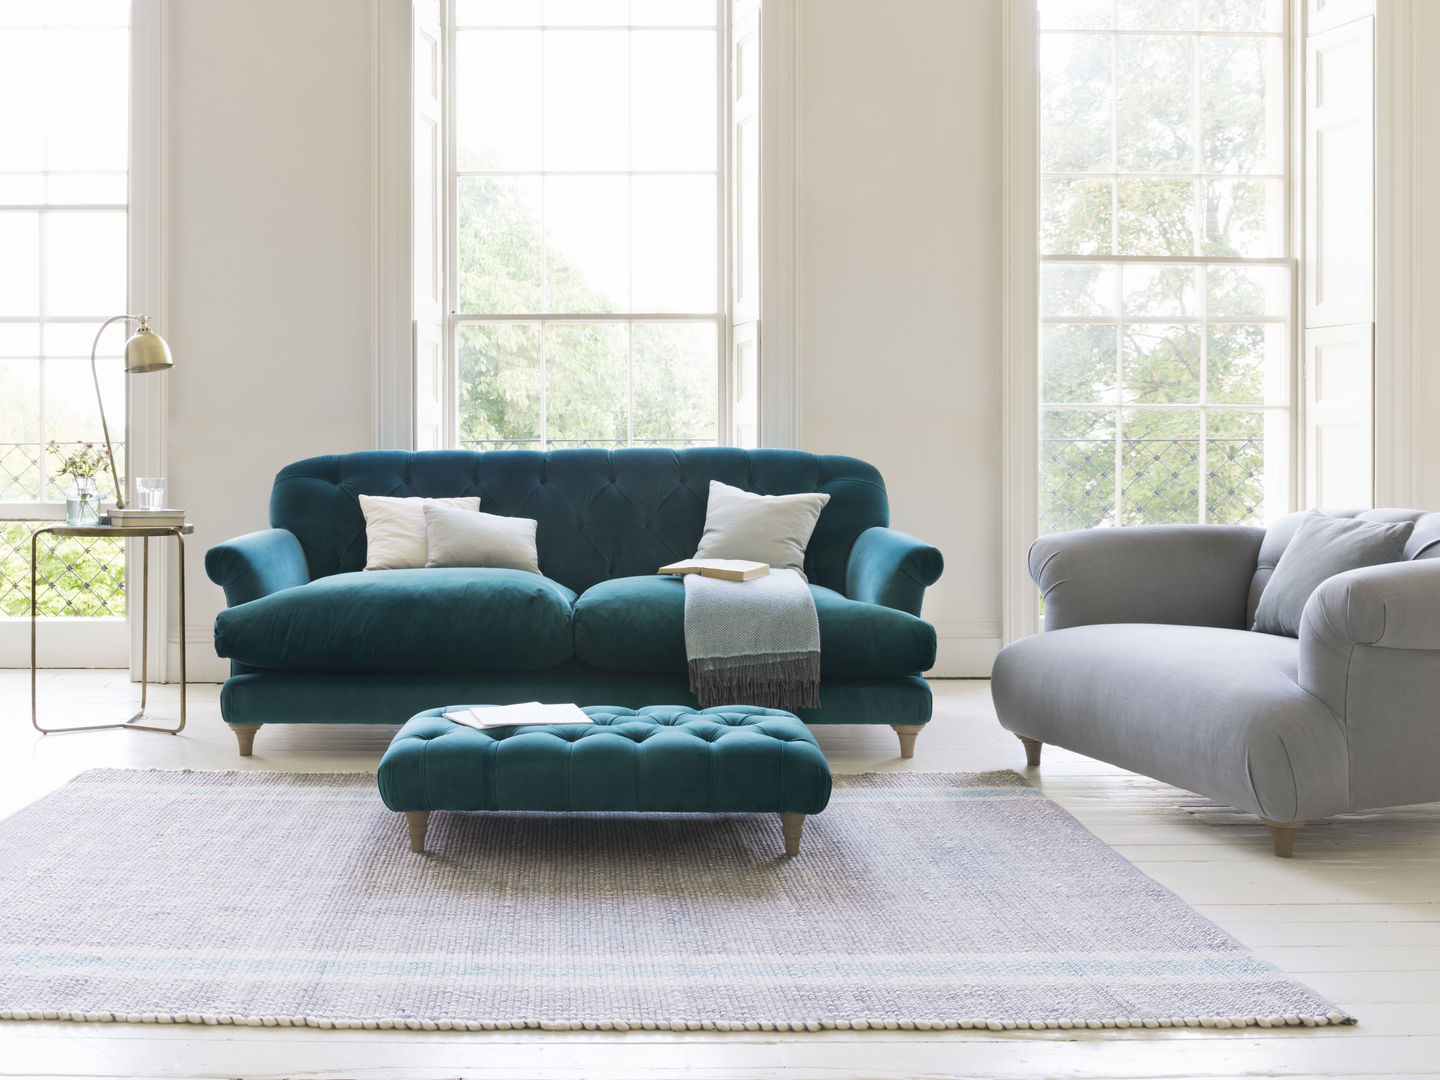 Comfty footstool Loaf Livings de estilo moderno footstool,teal,living room,sofa,space,windows,blue,velvet,green